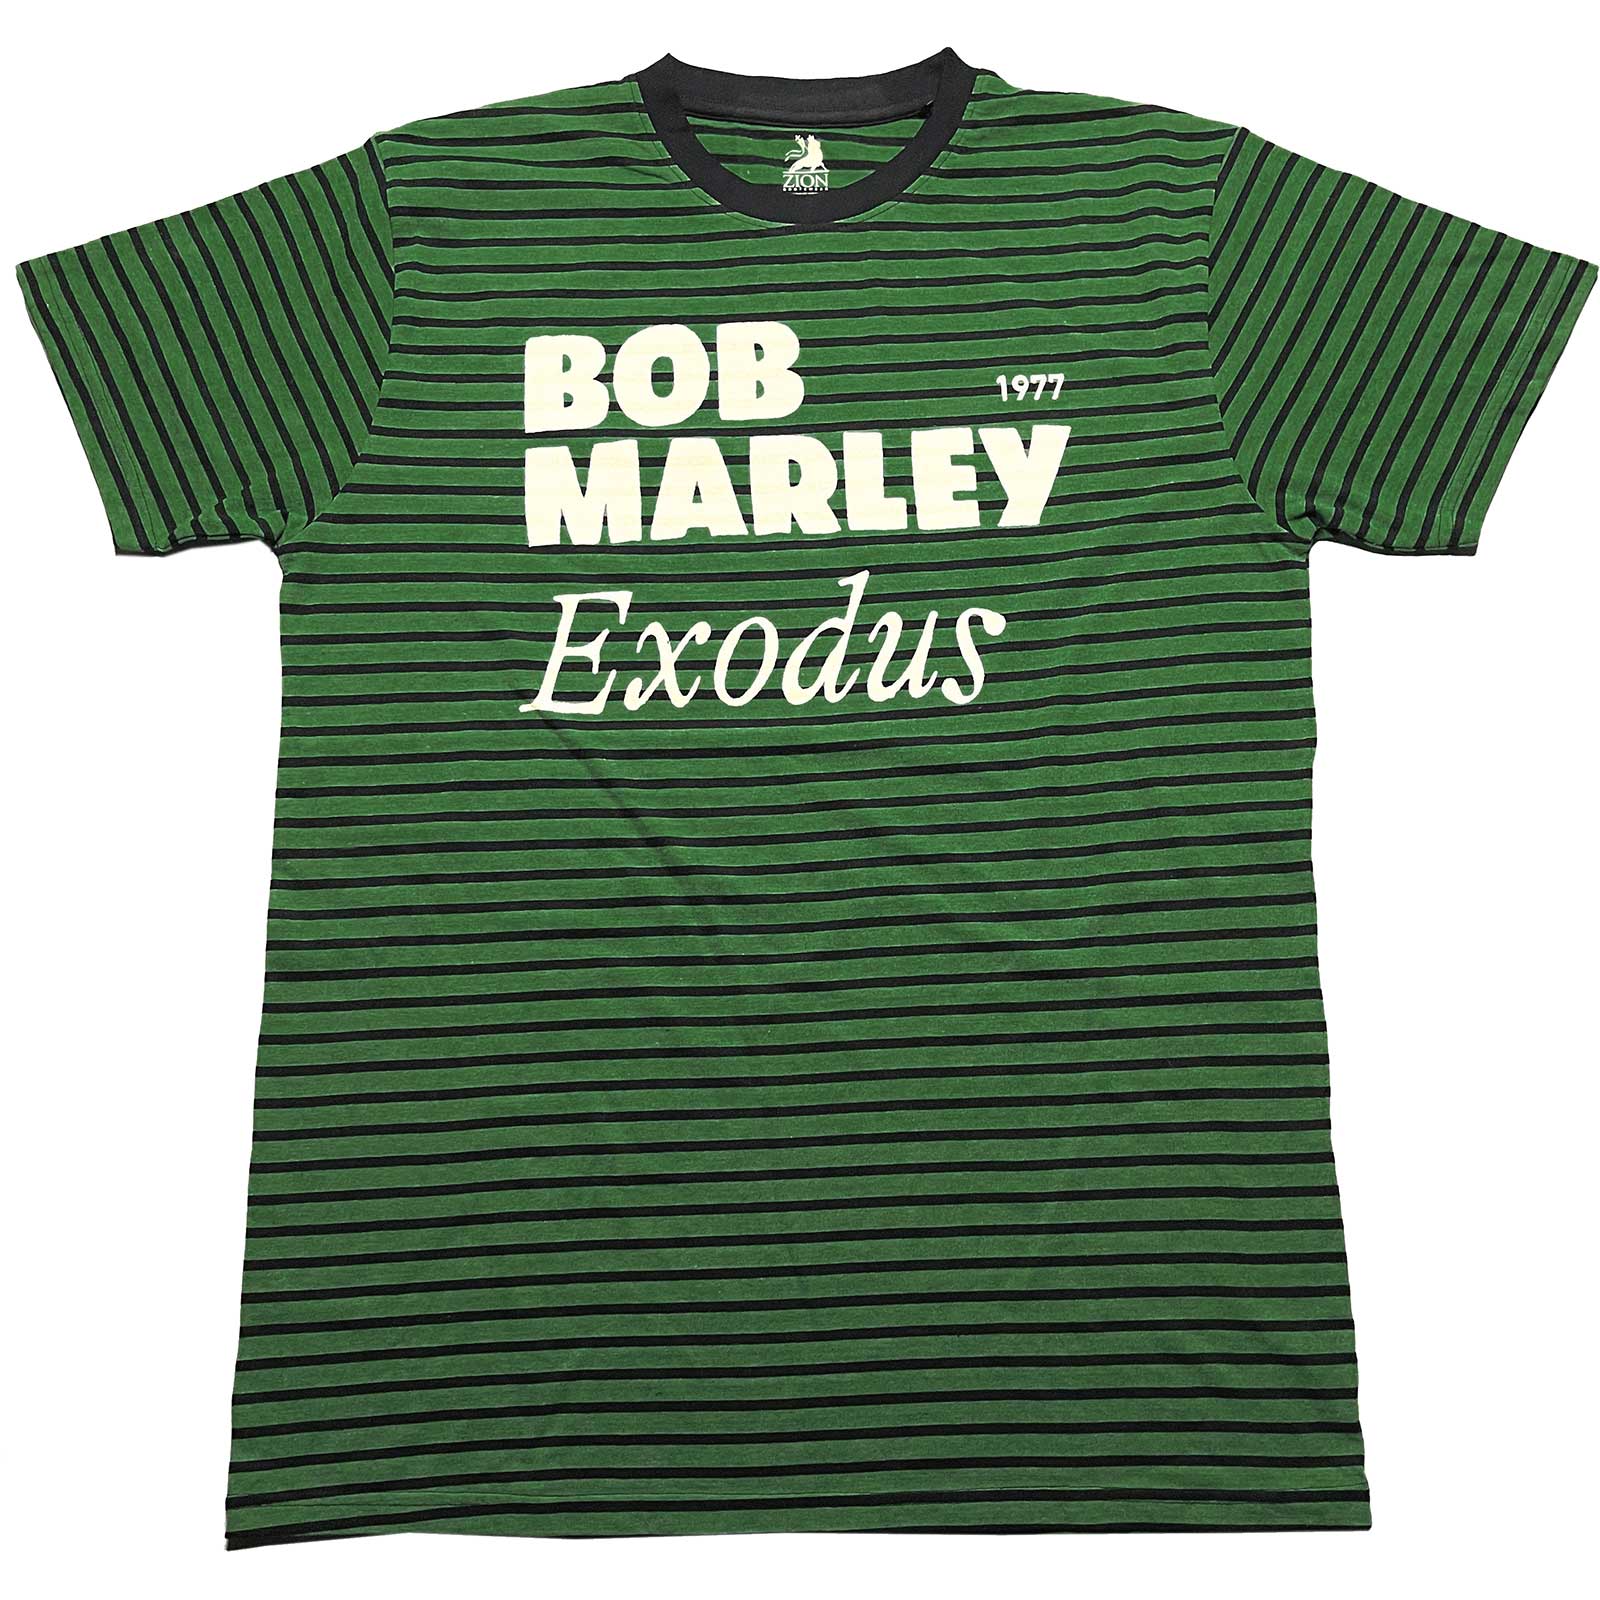 Bob Marley T-Shirt - Exodus (Ringer) - Unisex Official Licensed Design - Worldwide Shipping - Jelly Frog